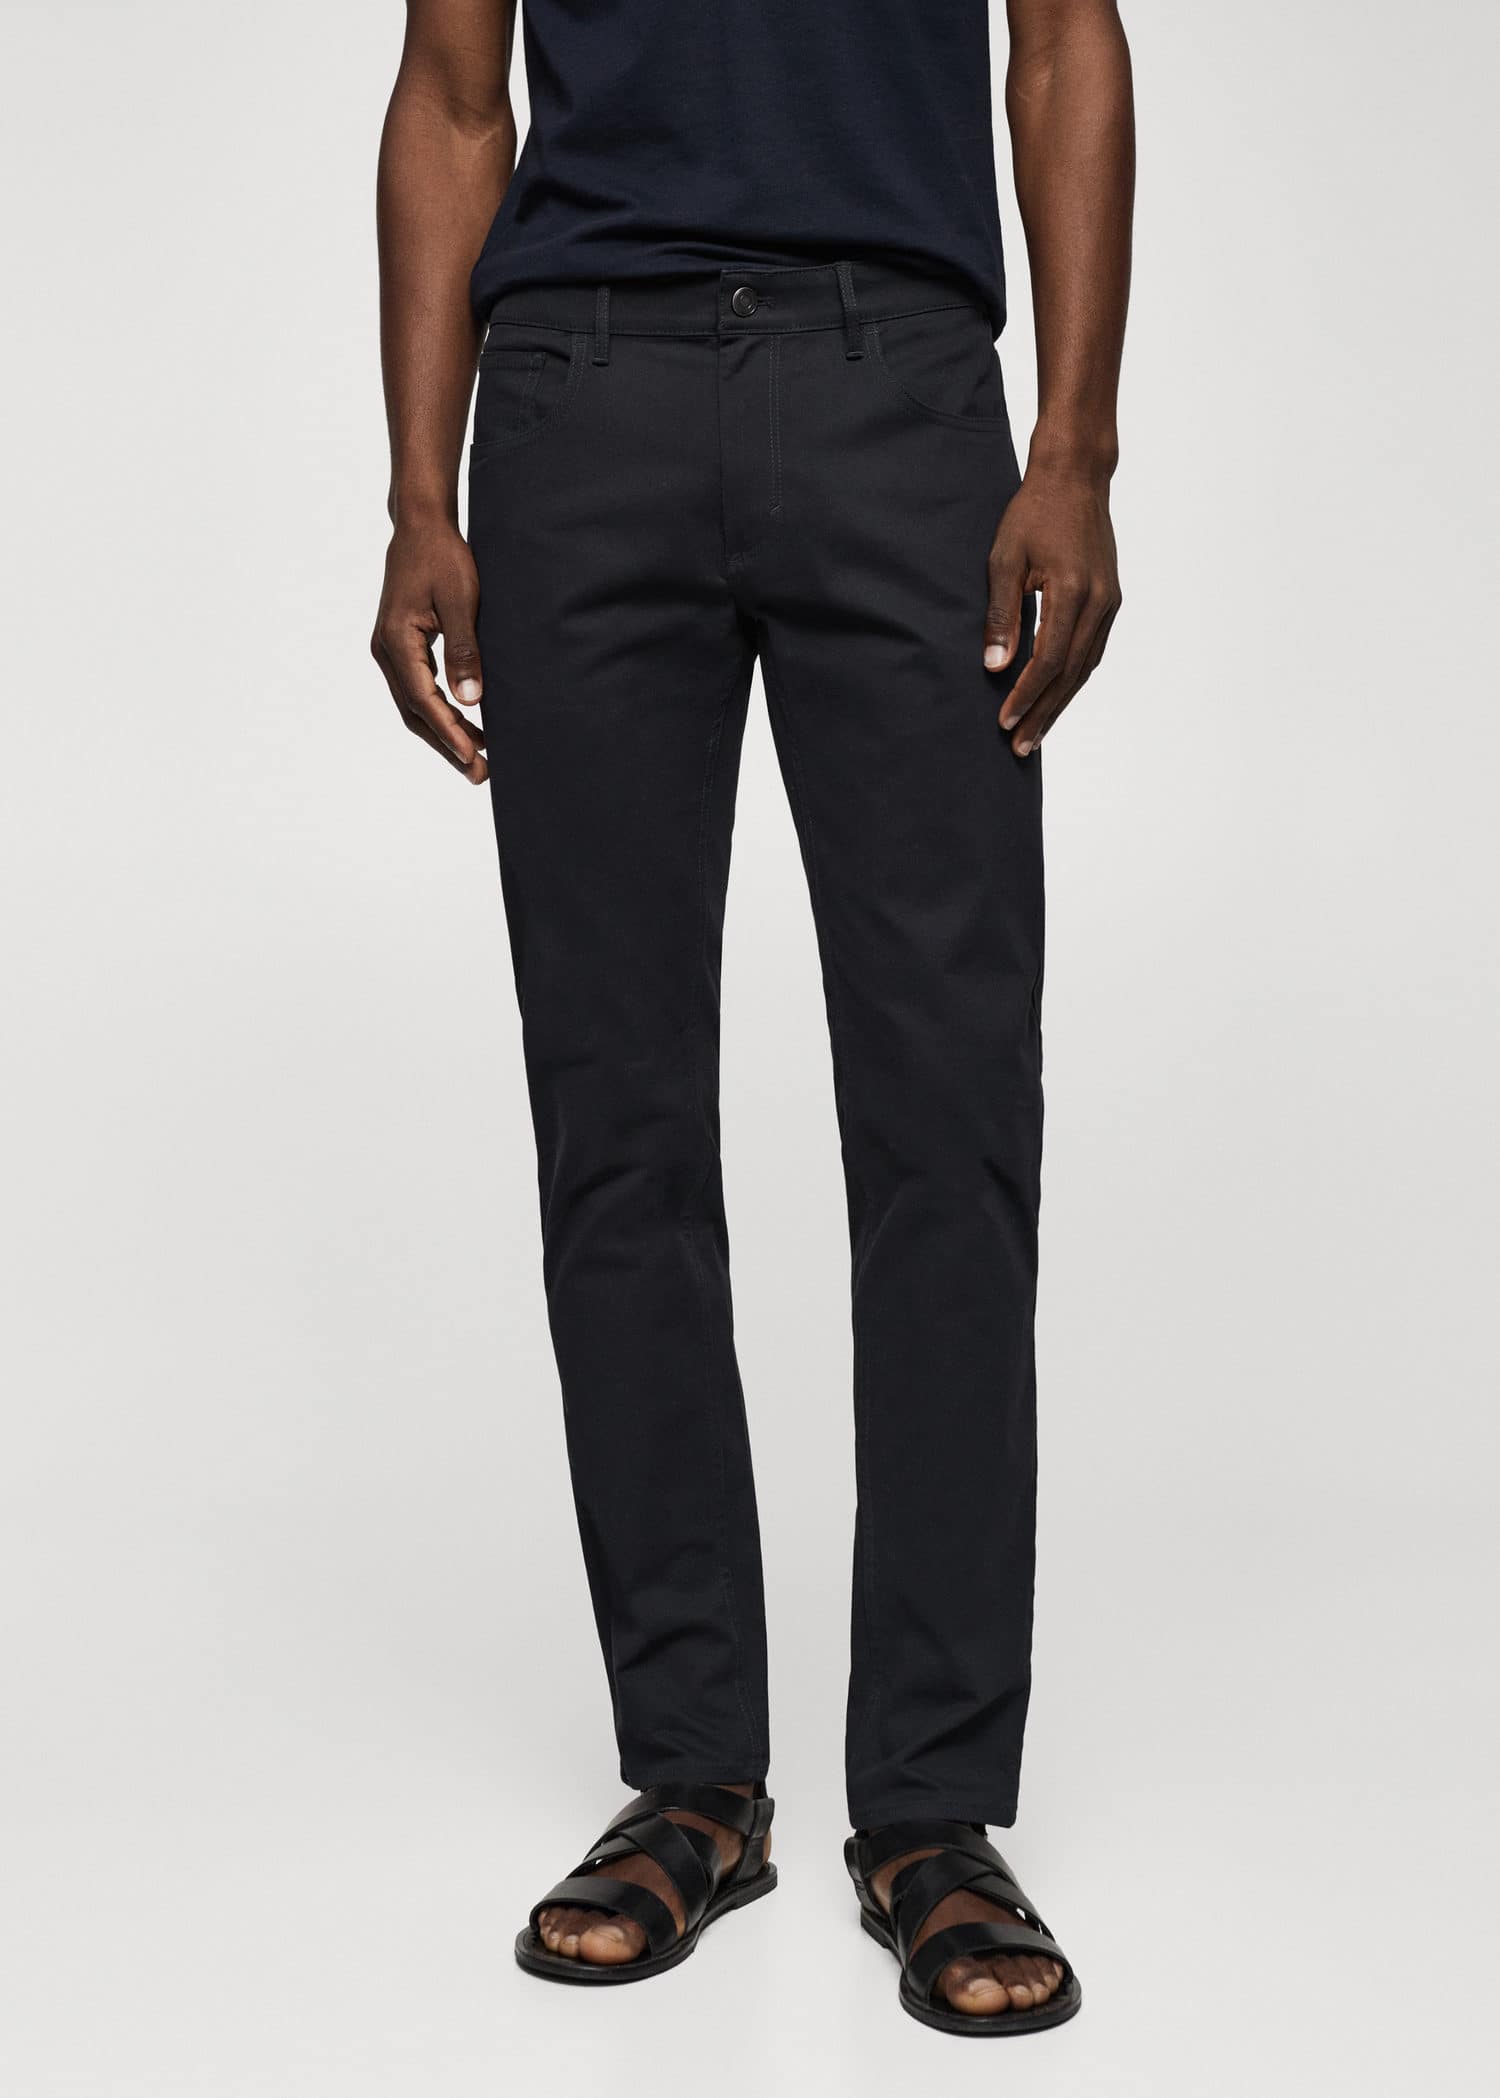 Calças de estilo jeans de sarja - Plano médio